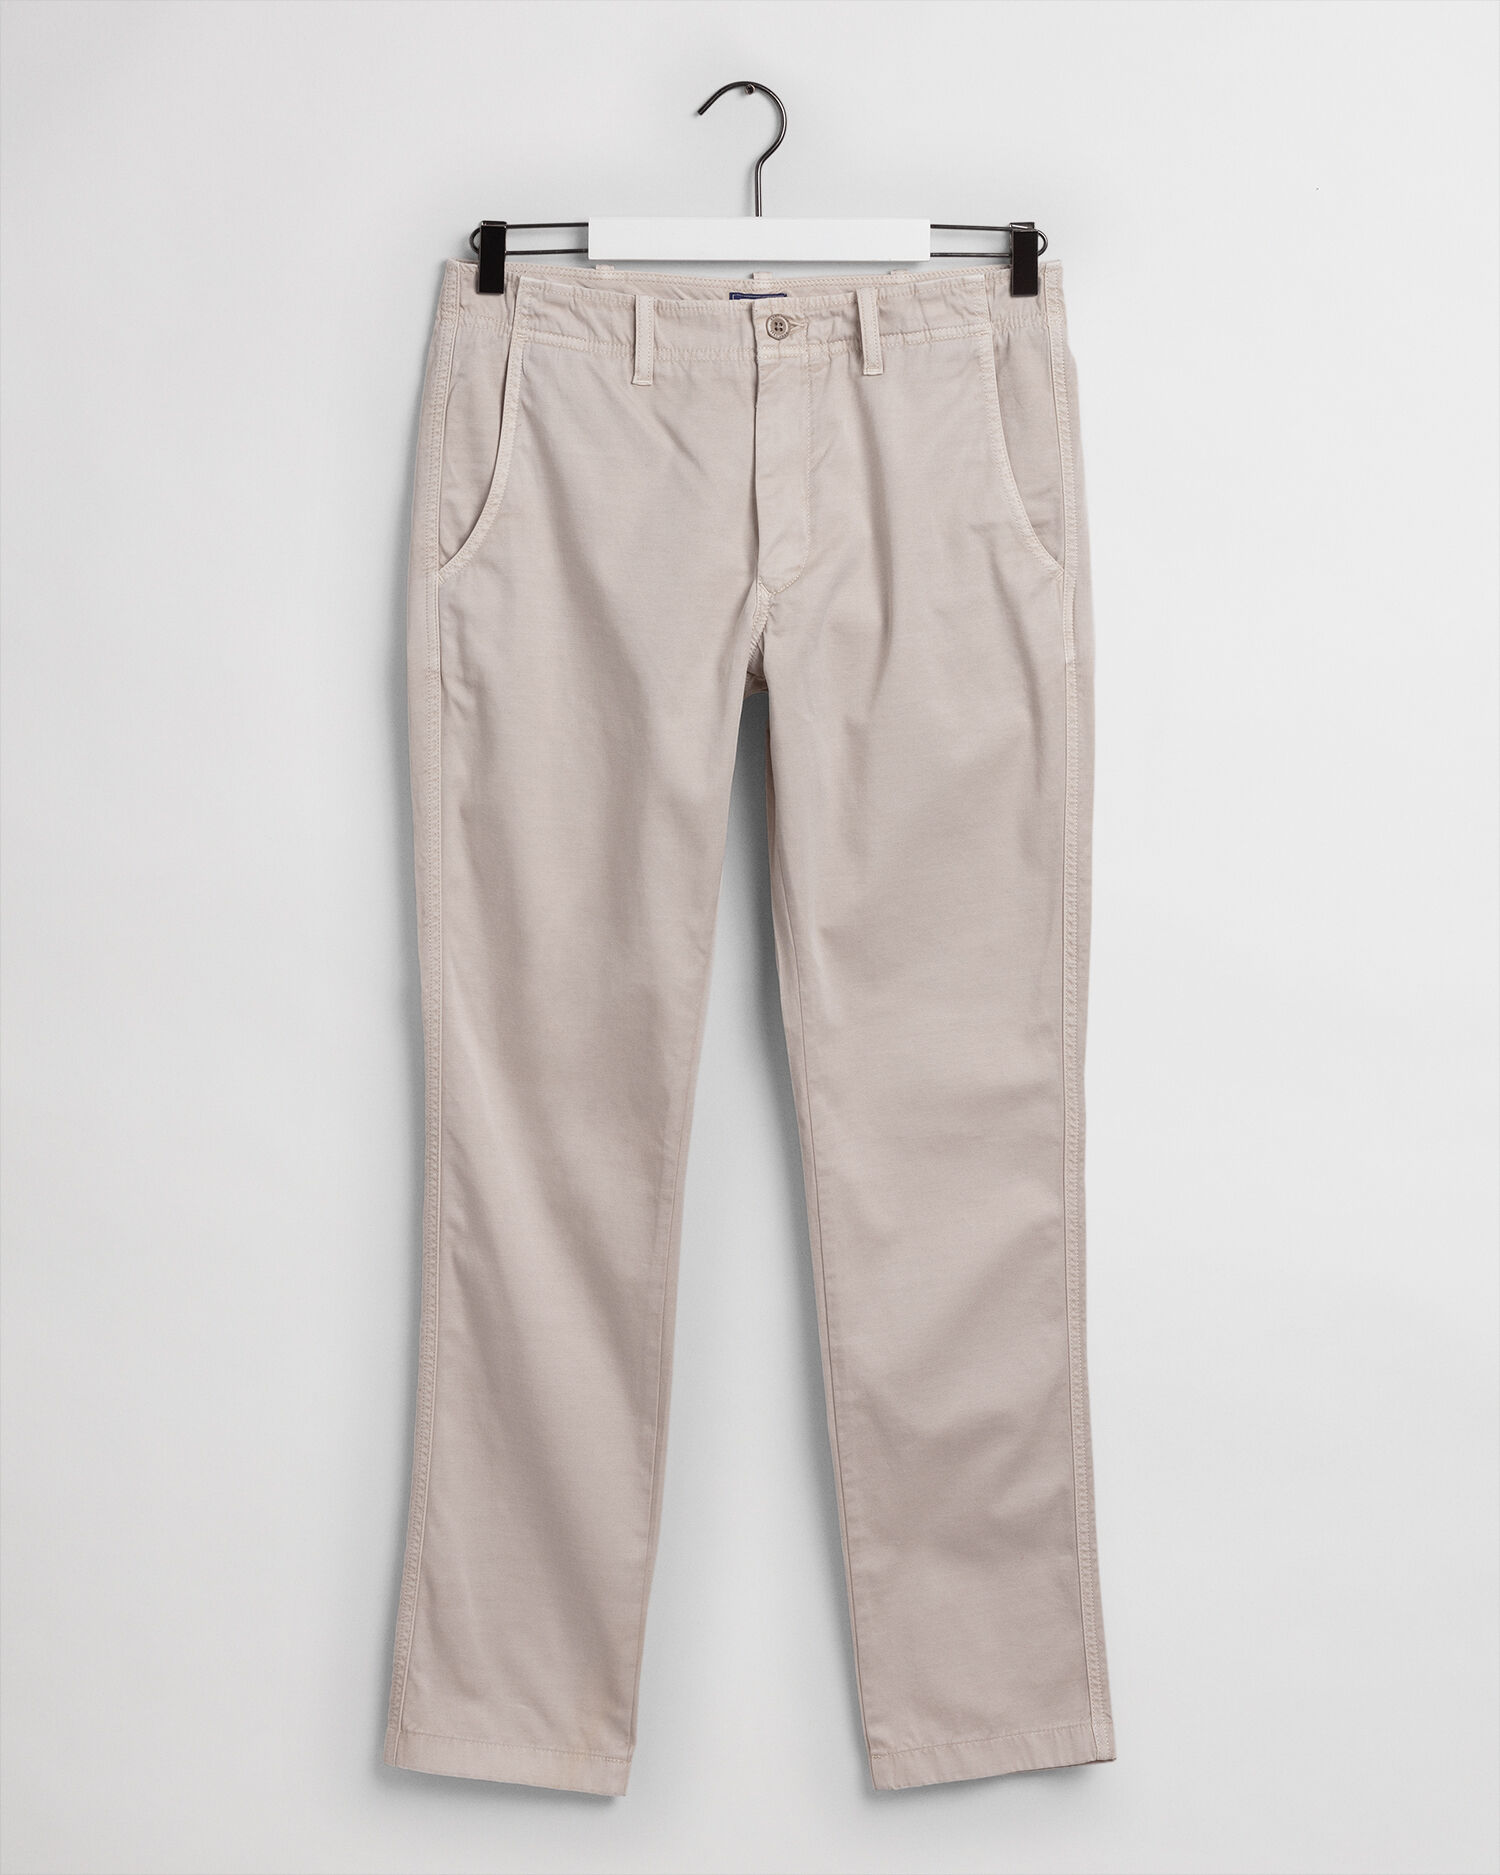 Slim Built-In Flex Ultimate Tech Chino Pants for Men | Old Navy | Mens pants,  Chinos pants, Pants